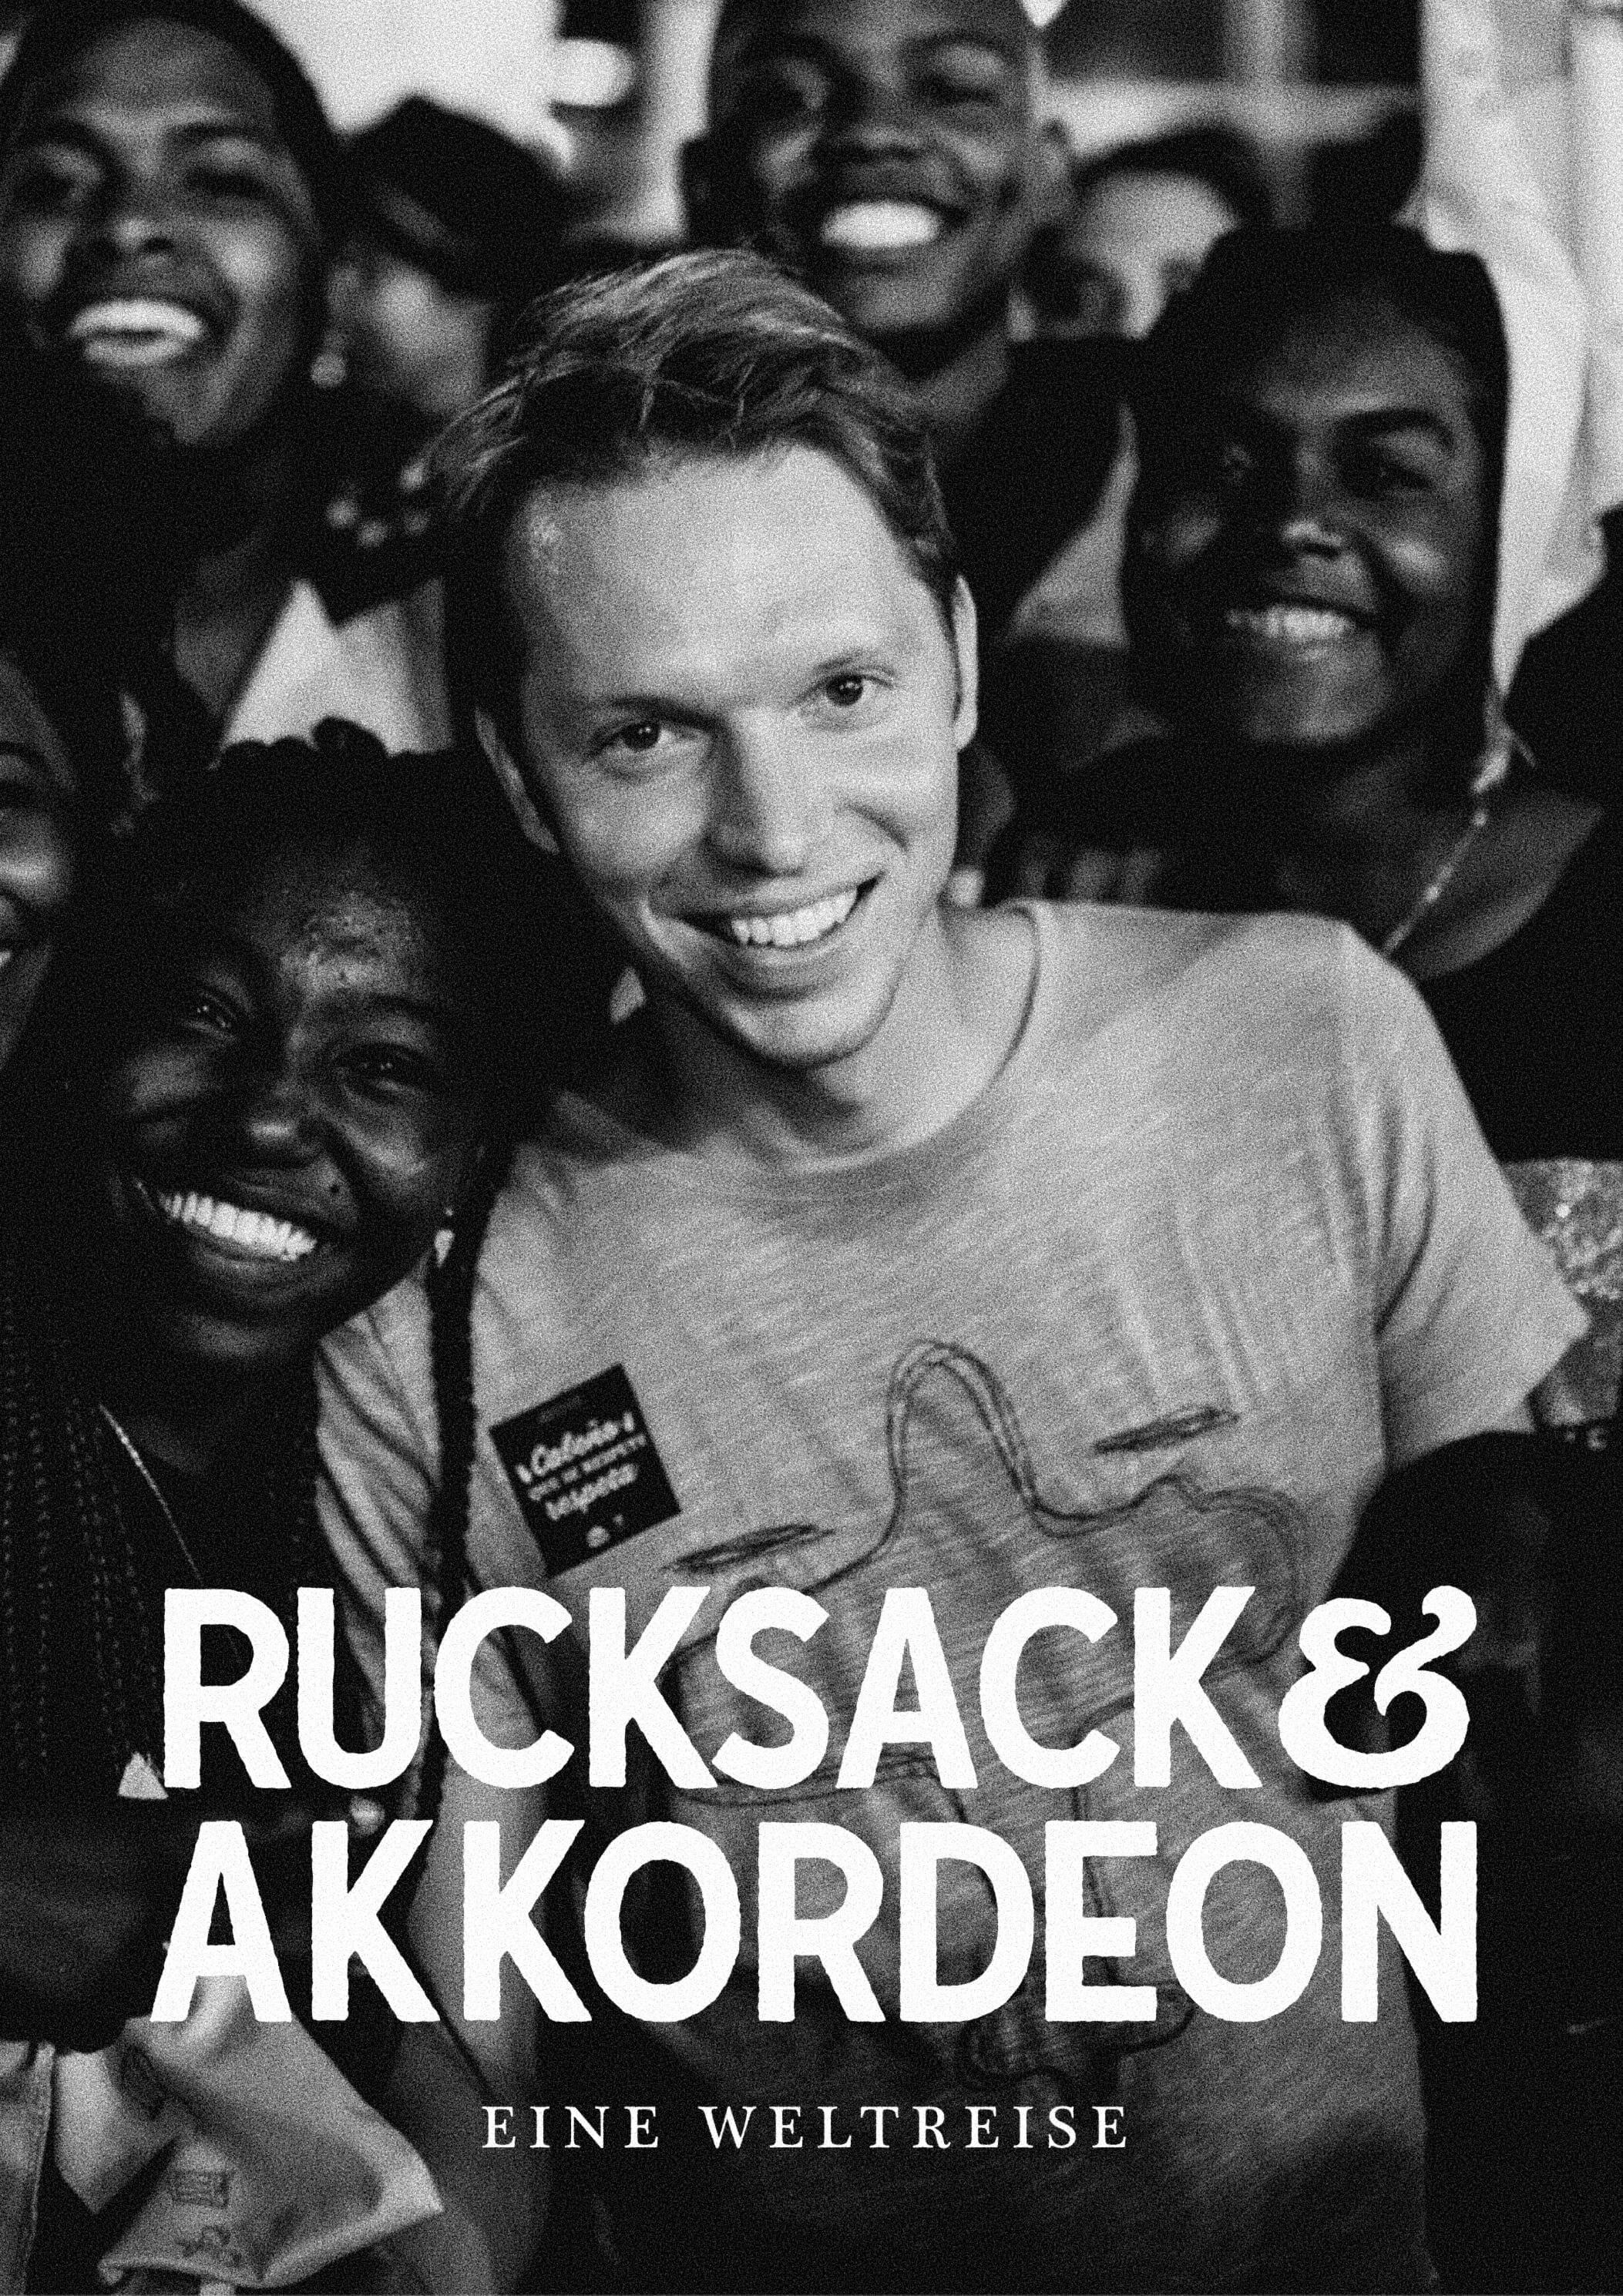 RUCKSACK&AKKORDEON plakat.jpg